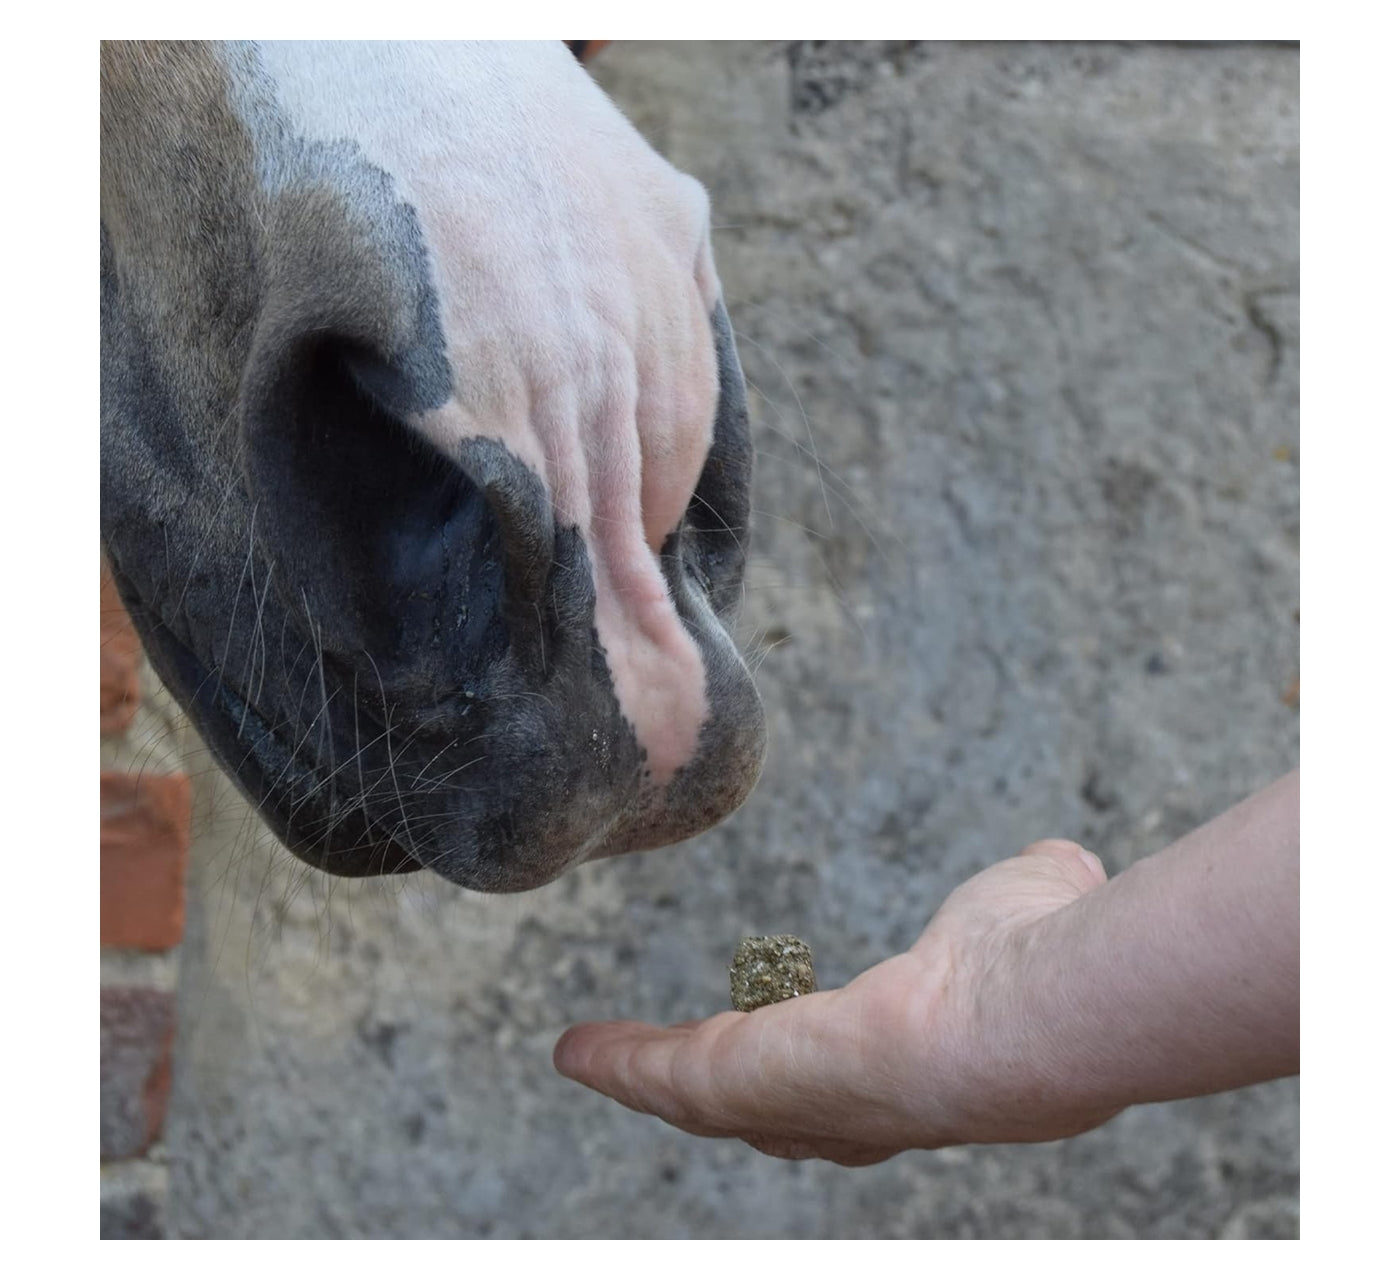 Spillers - Meadow Herb Horse Treats 1kg - Buy Online SPR Centre UK